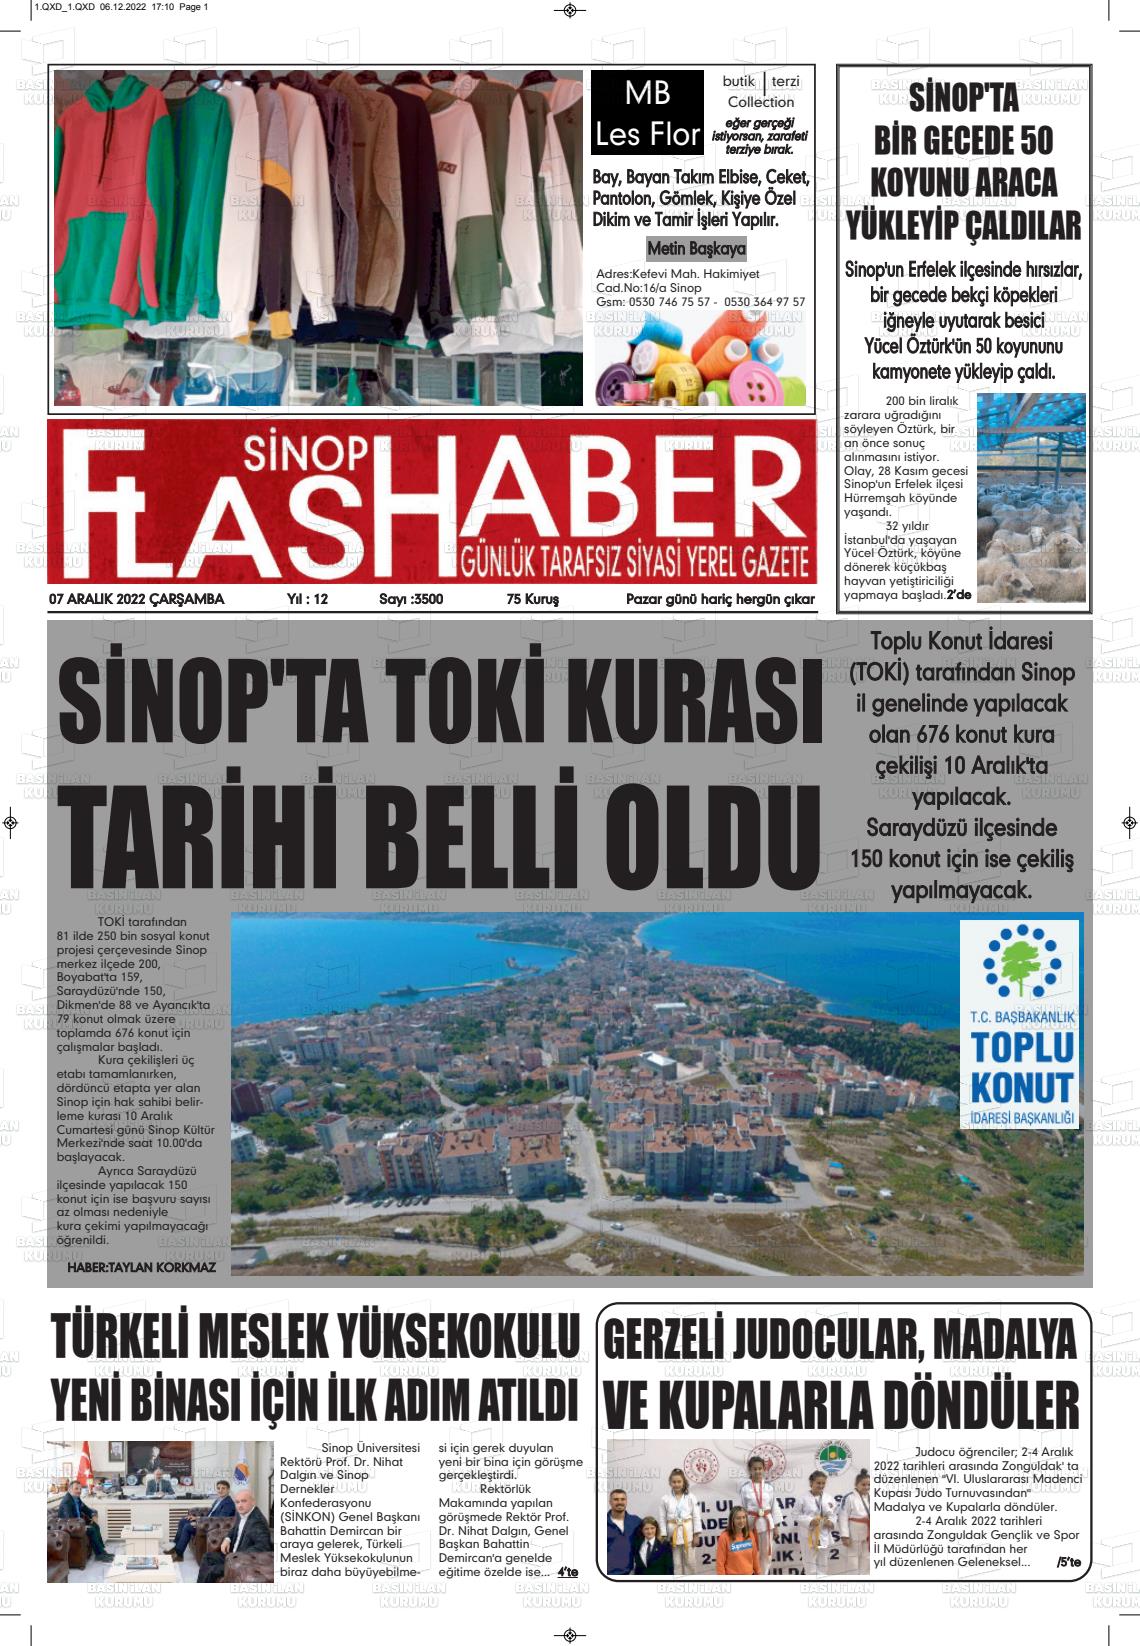 07 Aralık 2022 Sinop Flaş Haber Gazete Manşeti